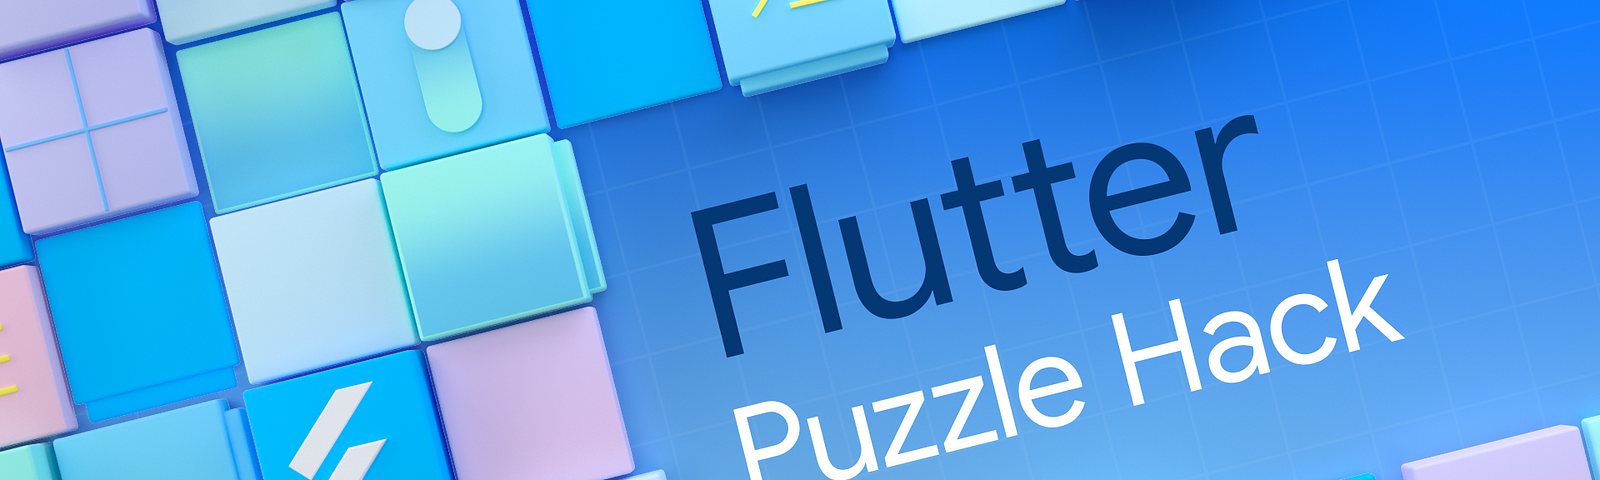 The Flutter puzzle hack logo